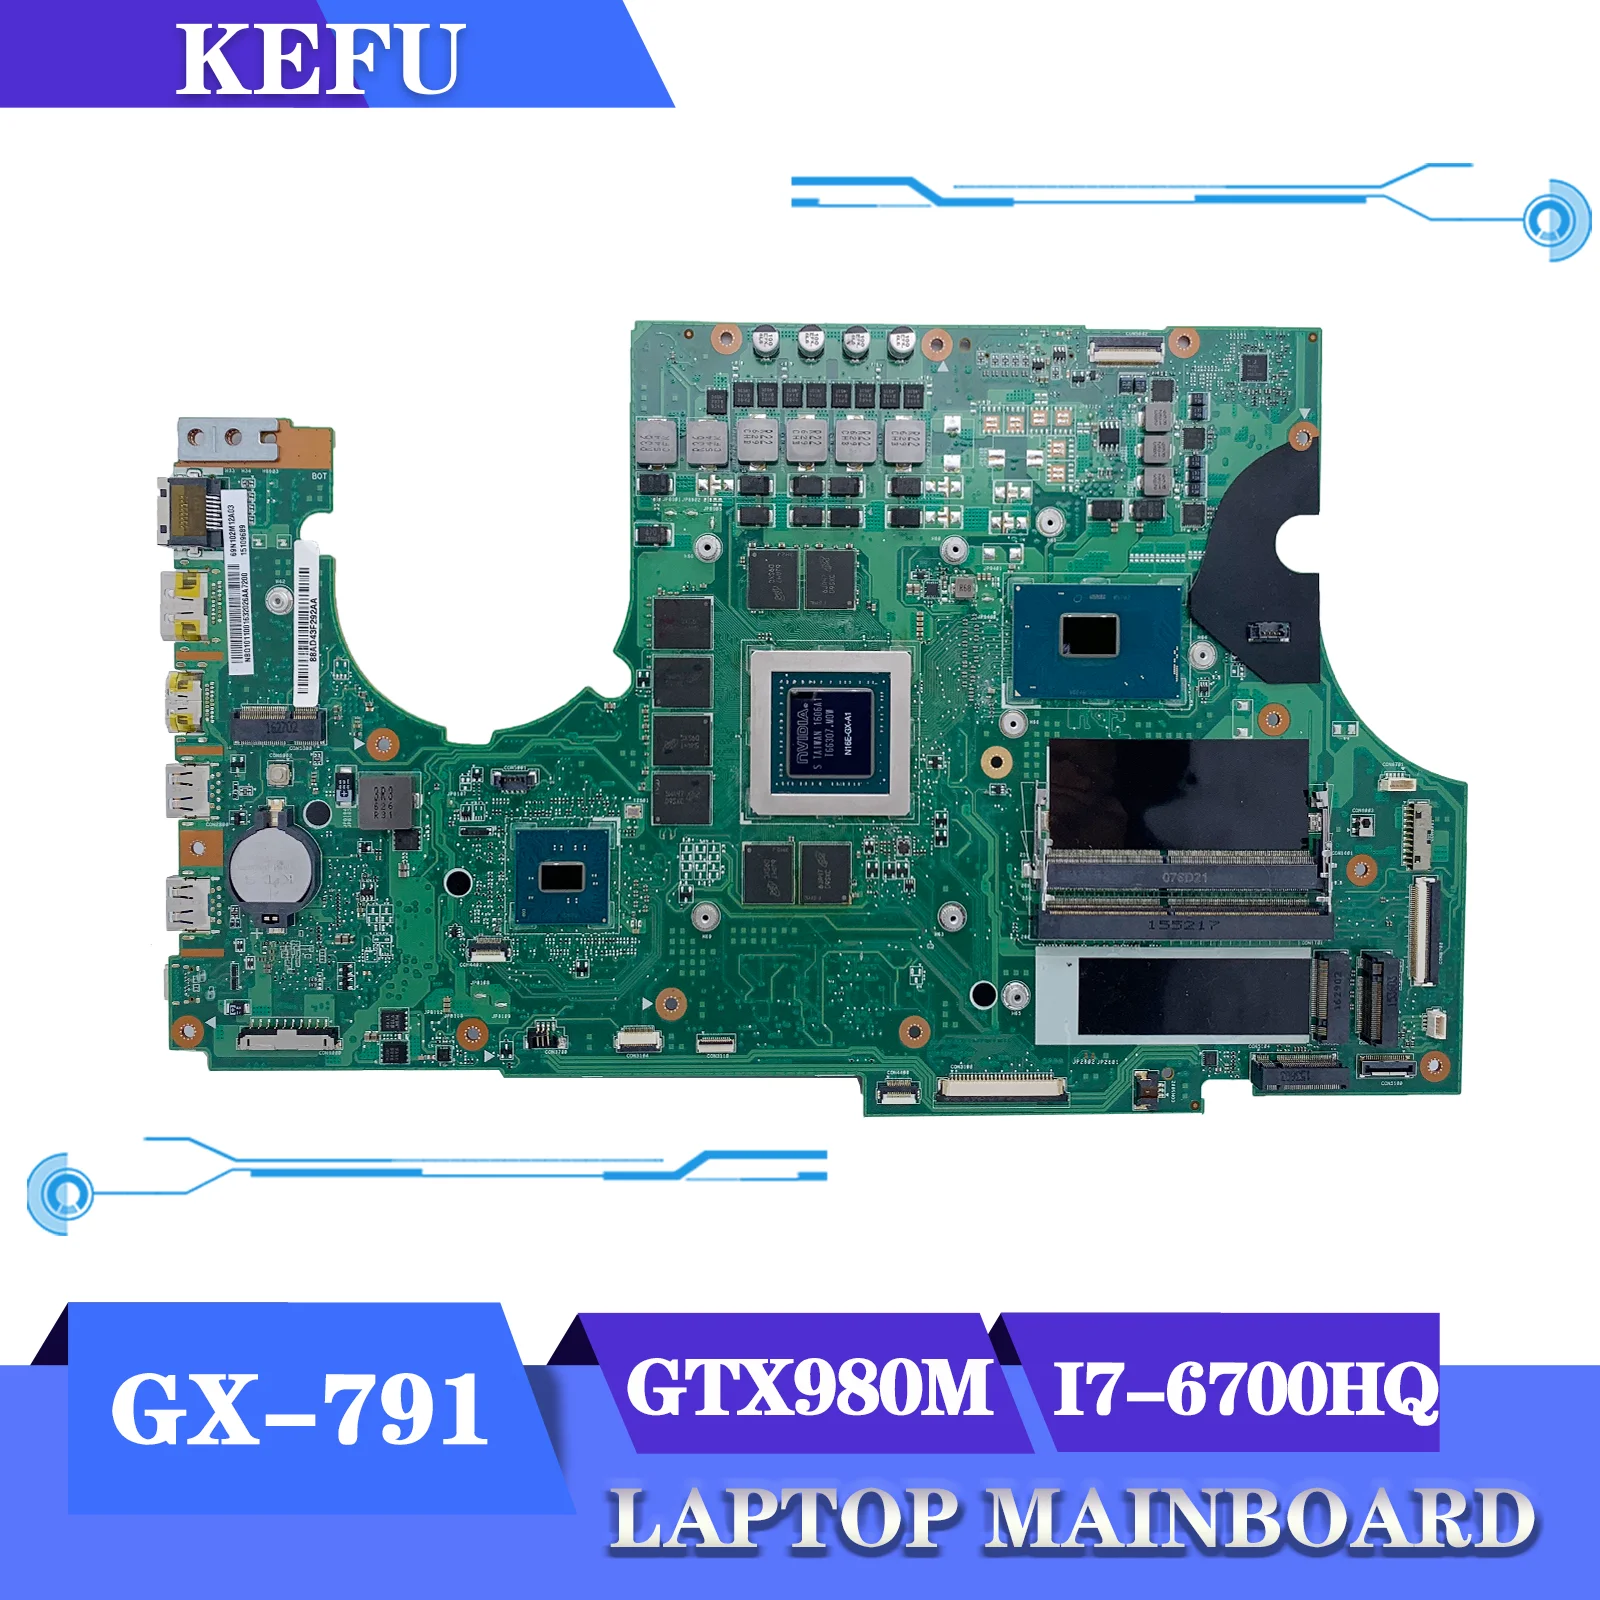 

KEFU P7NCR Mainboard For Acer Predator 17 GX-791 G9-791 G9-792 GX-79 Laptop Motherboard I7-6700HQ GTX980M-8G 100% Test OK